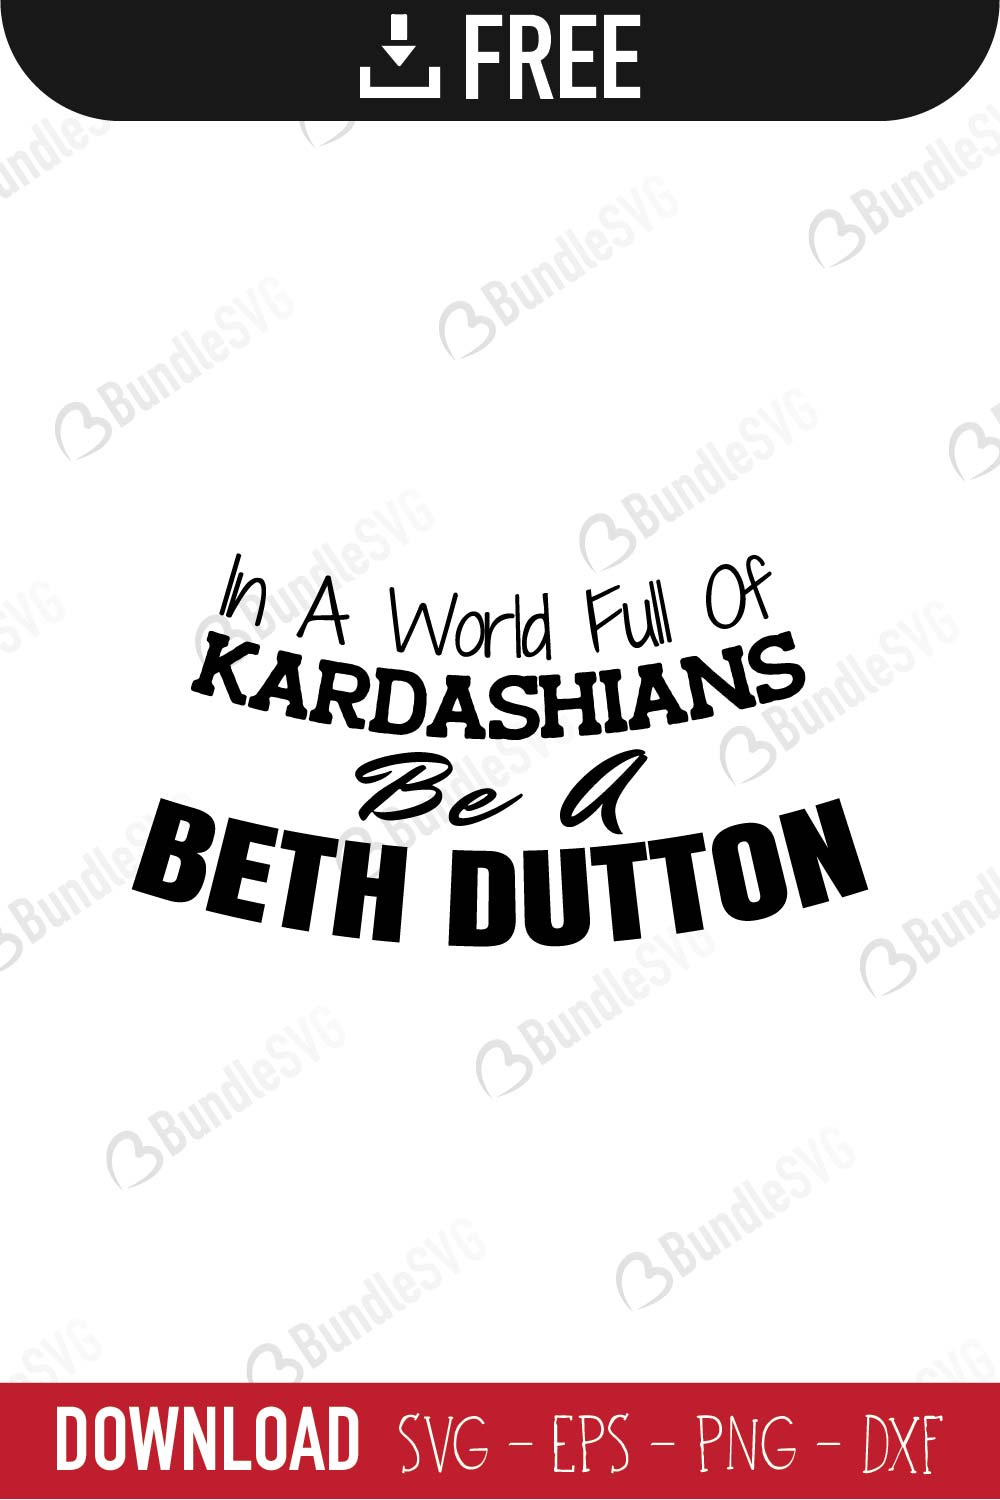 Download Beth Dutton Svg Cut Files Free Download Bundlesvg